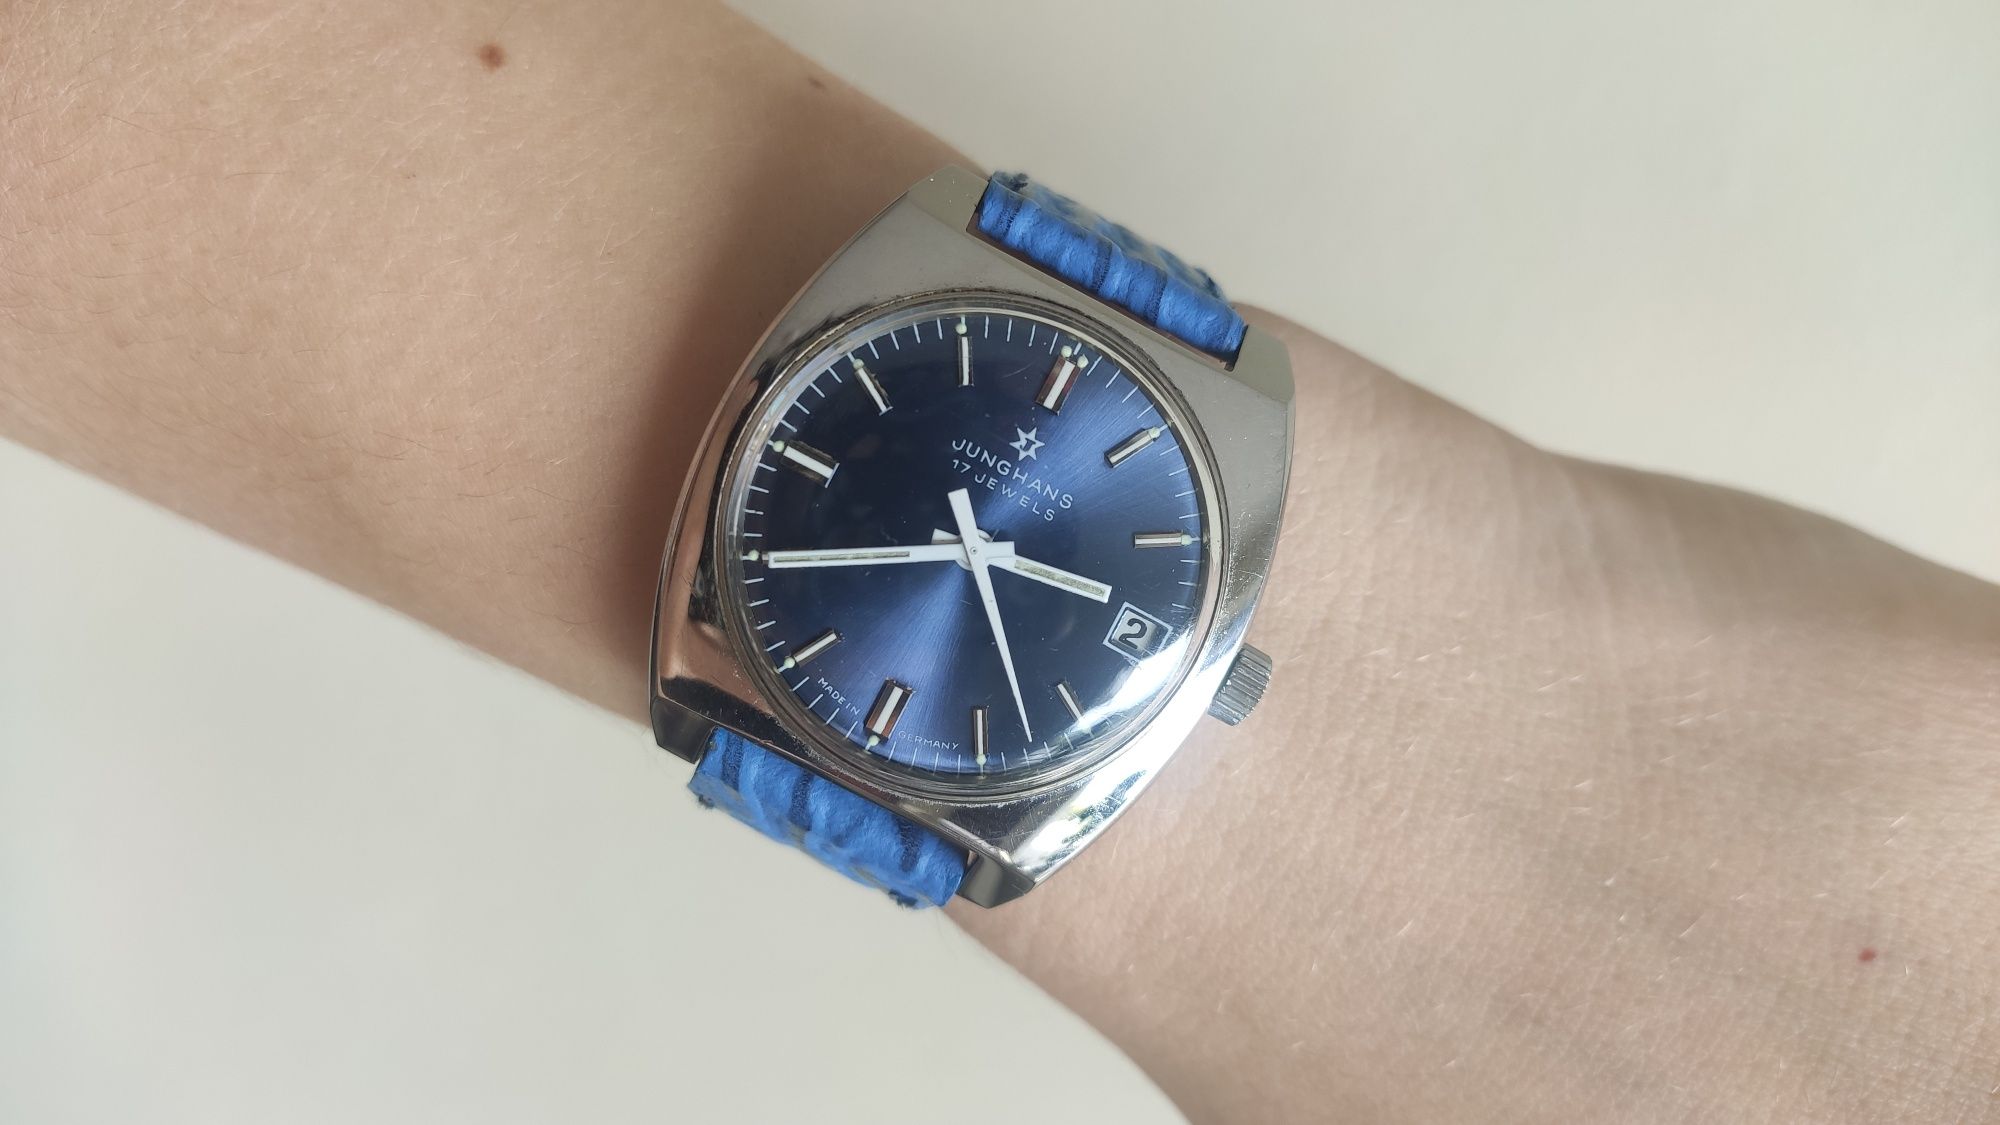 Zegarek Junghans mechaniczny niebieski